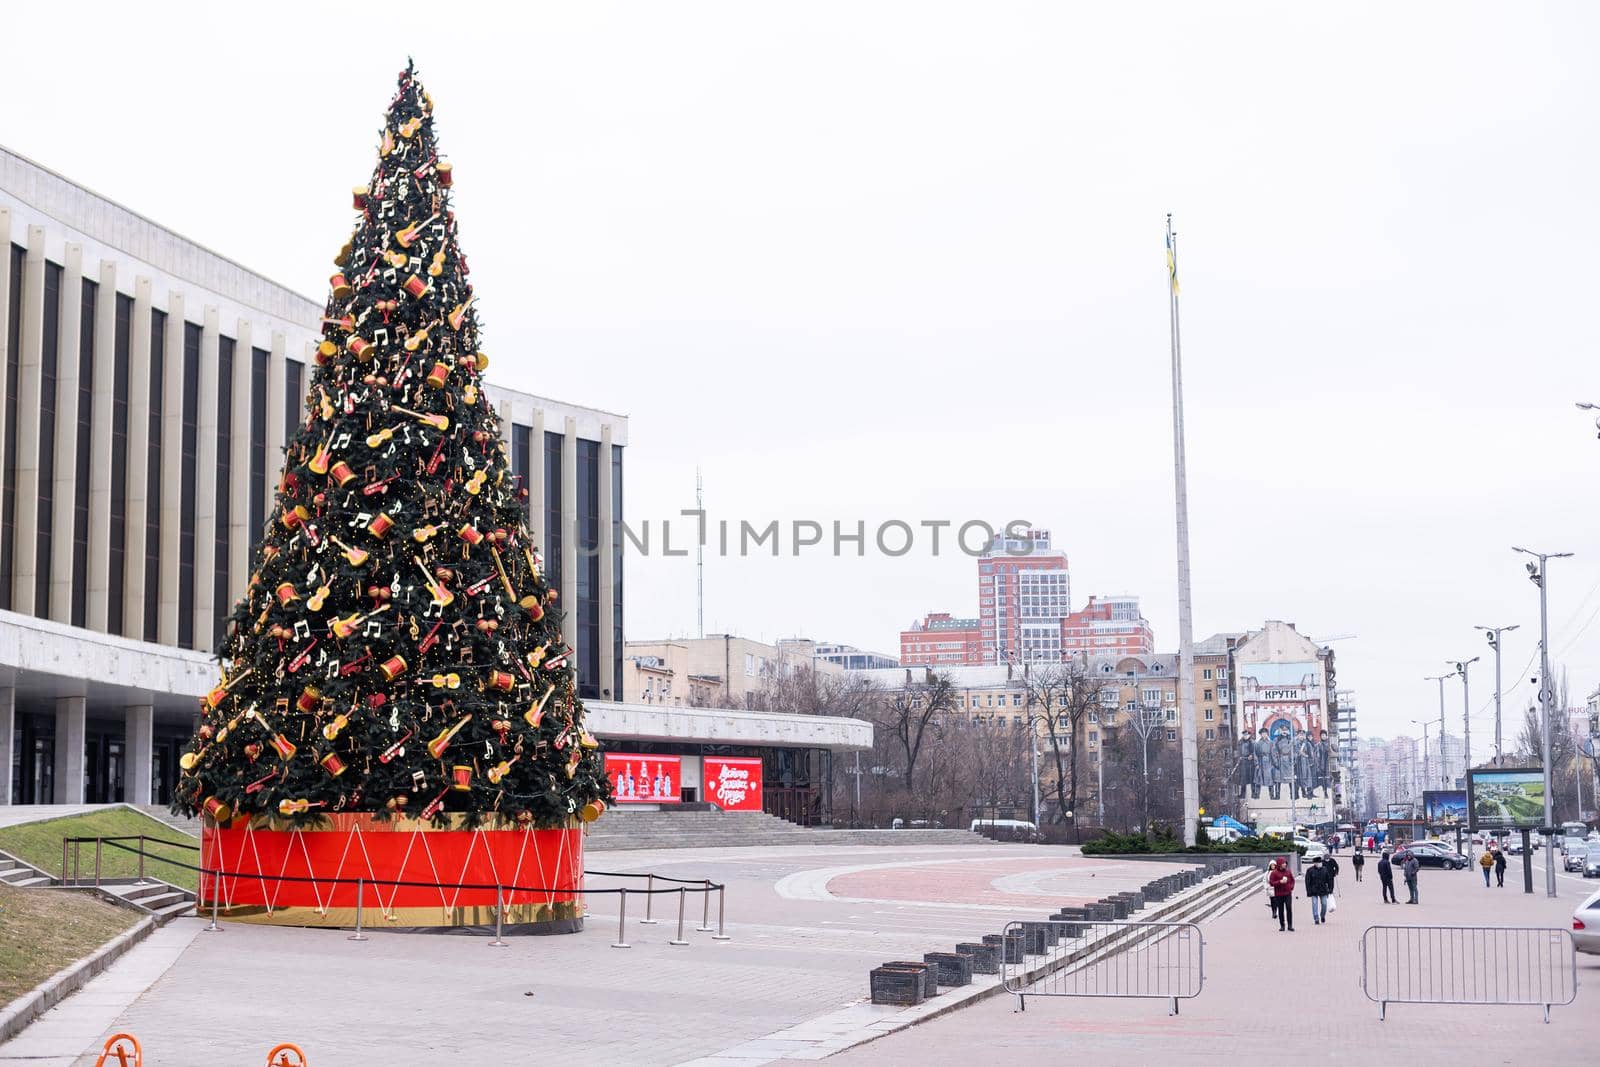 Kyiv, Ukraine - January 13, 2021: Street skating rink at the Christmas fair. Christmas Holidays at Palace Ukraine by Andelov13